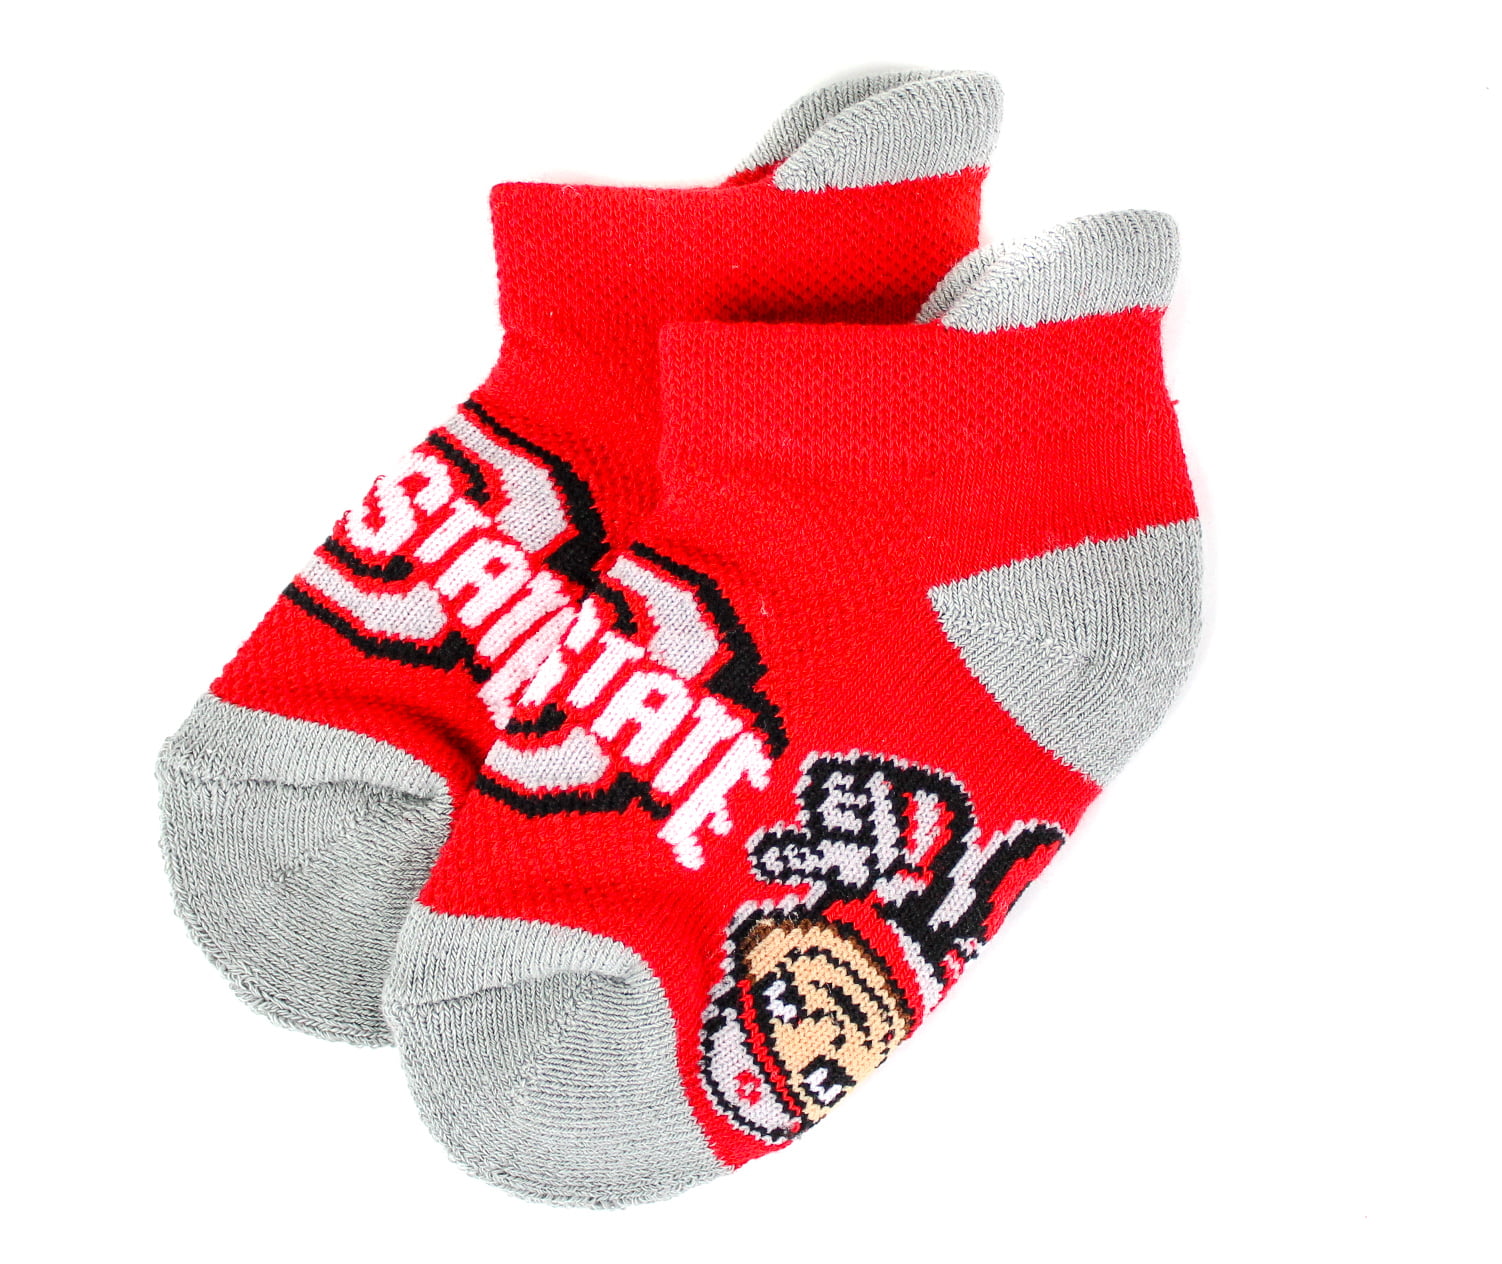 Ohio State Buckeyes Baby Footie Sock